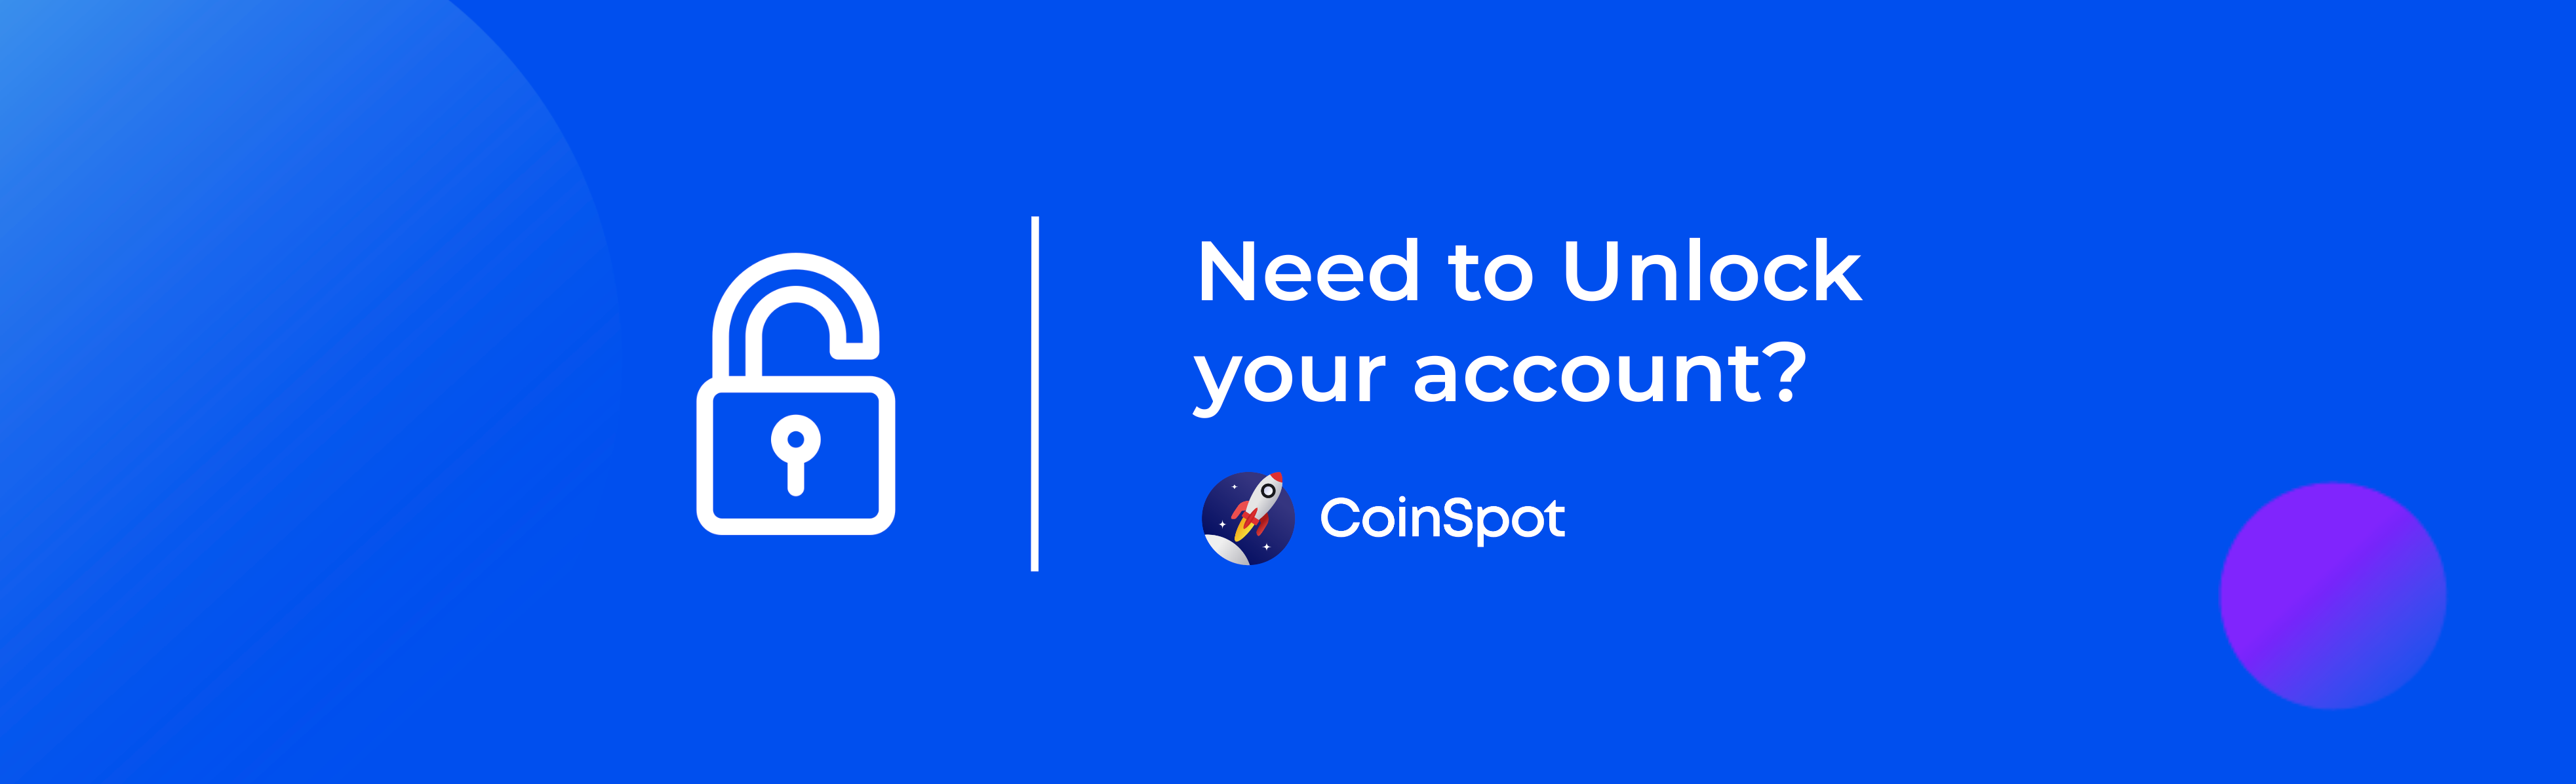 CoinSpot - Unlock Account.png